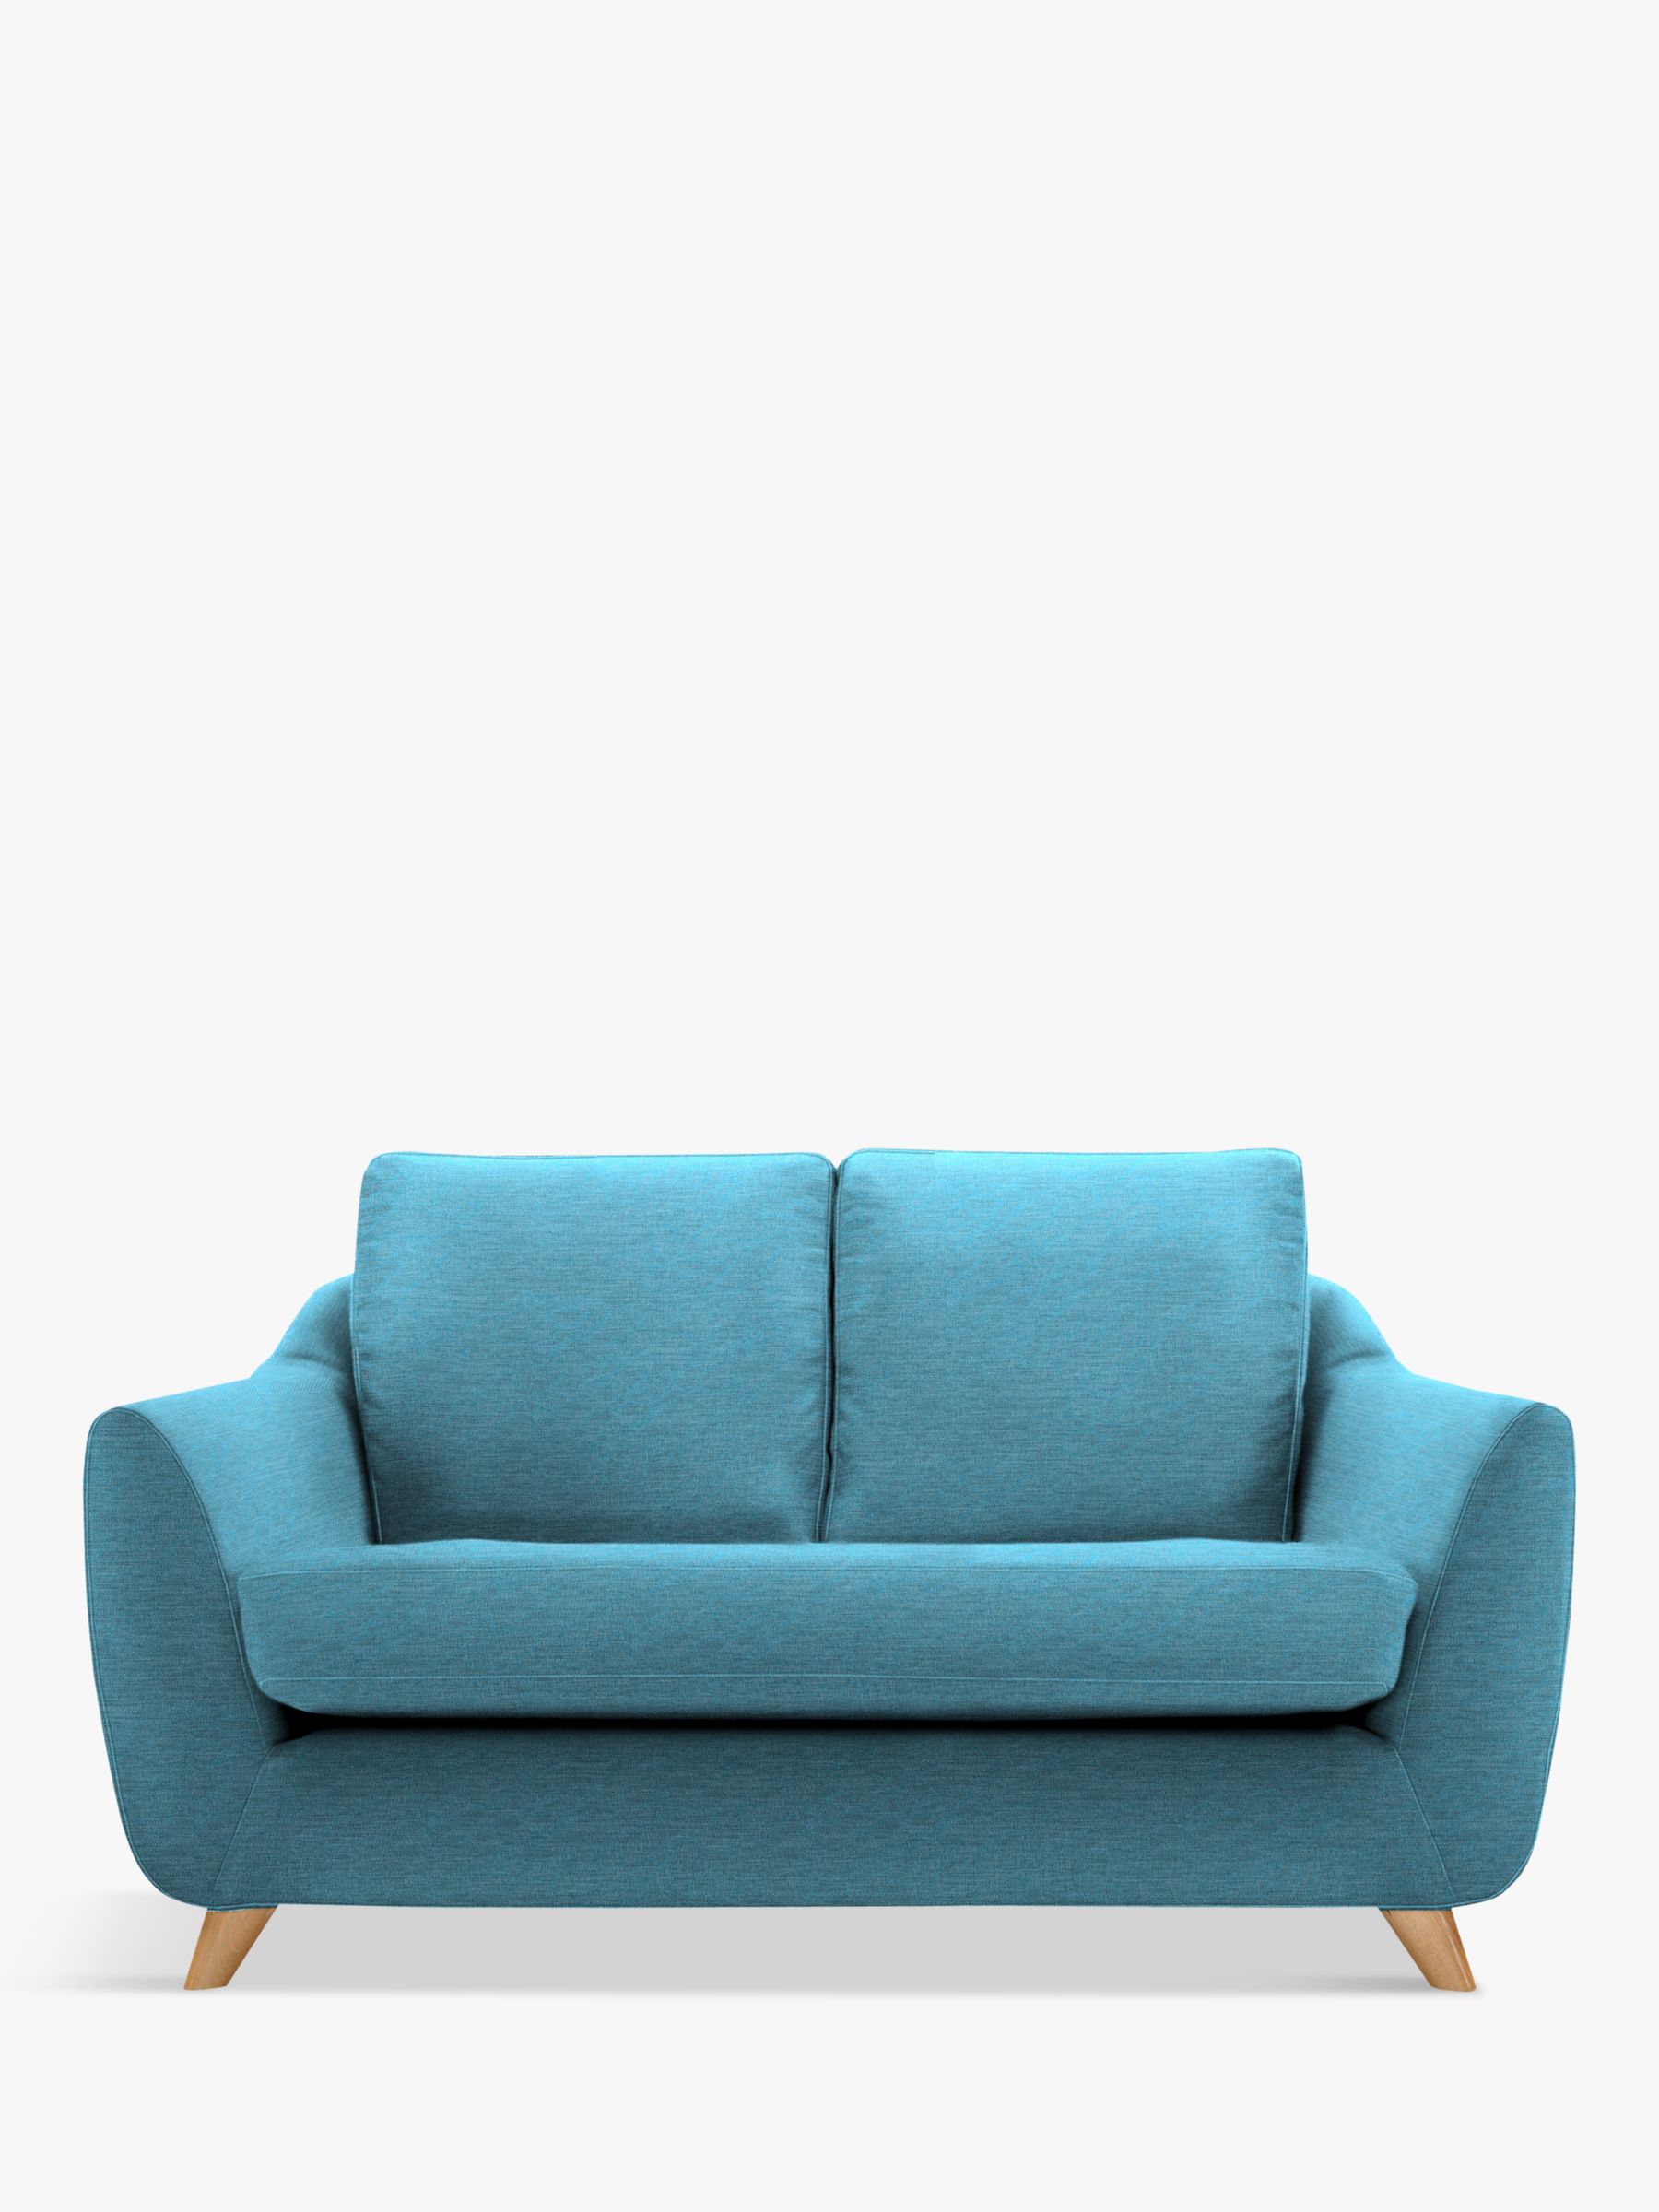 G Plan Vintage The Sixty Seven Small Sofa, Fleck Blue, width 154cm